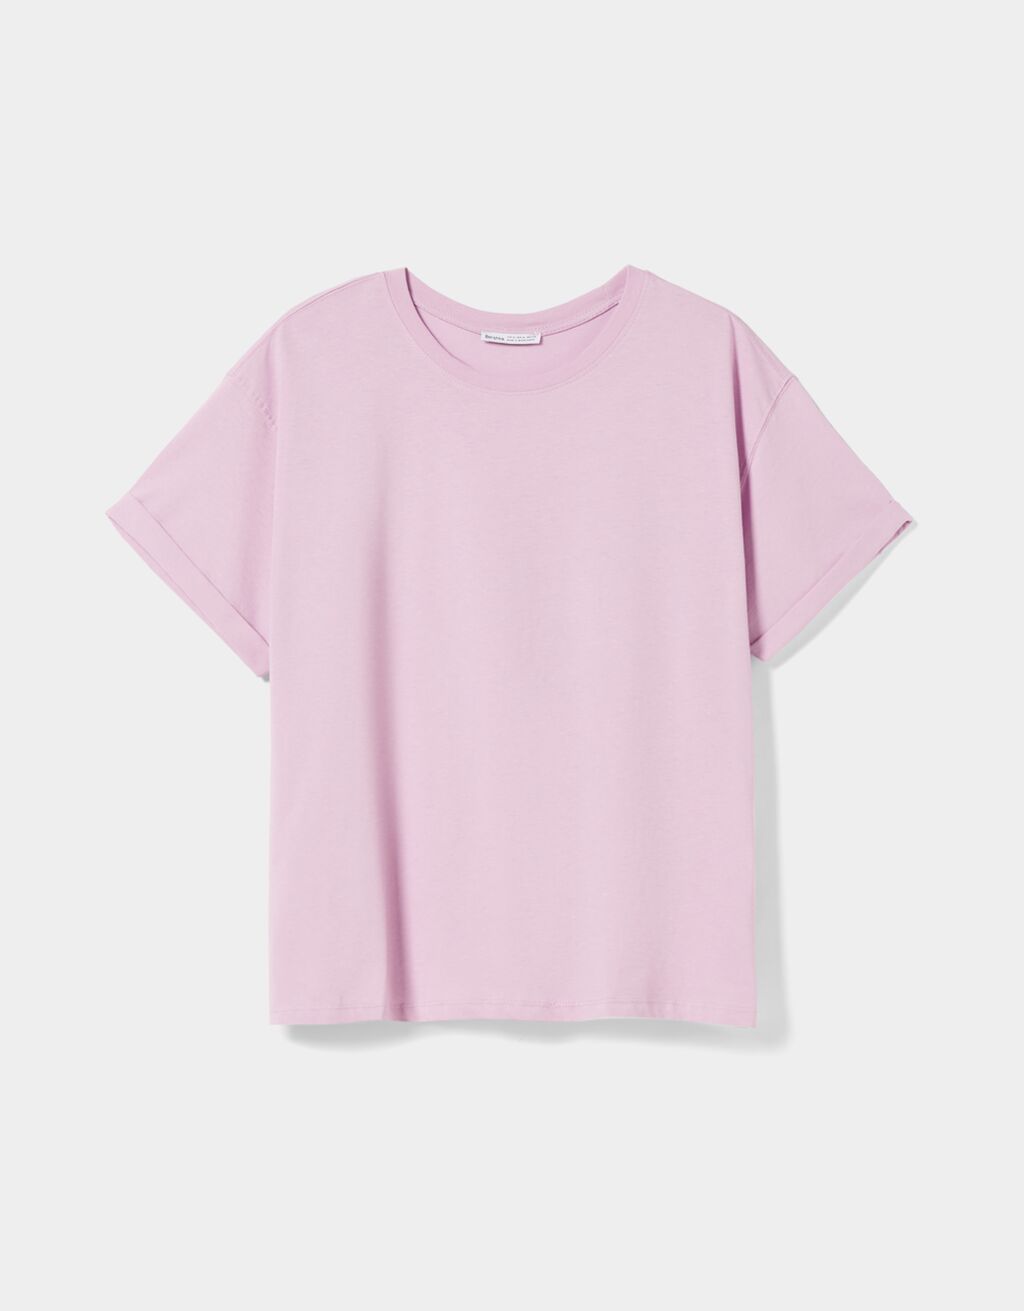 Oversized short-sleeved cotton T-shirt